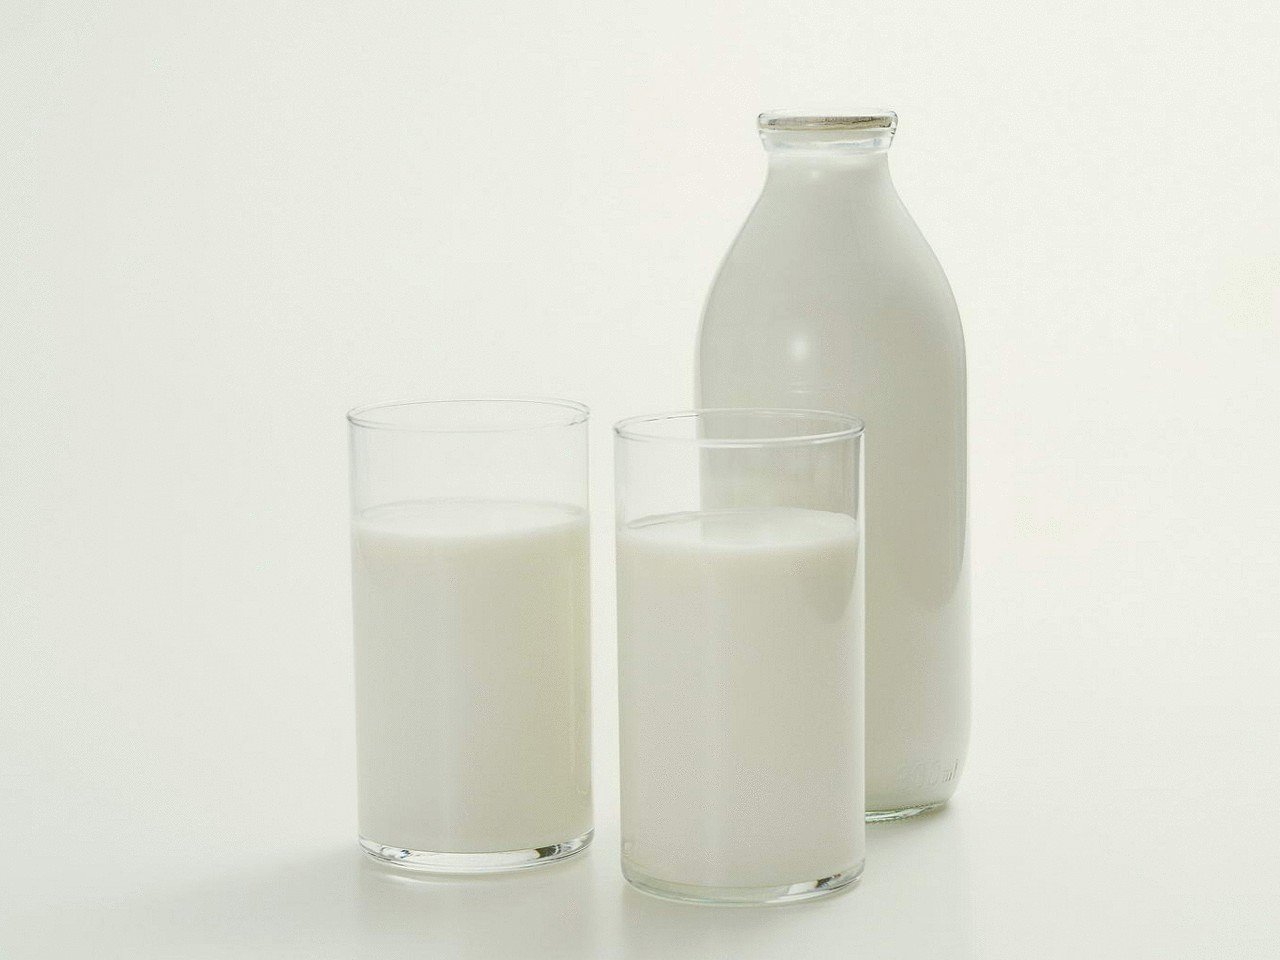 Стакан молока утром поможет проснуться